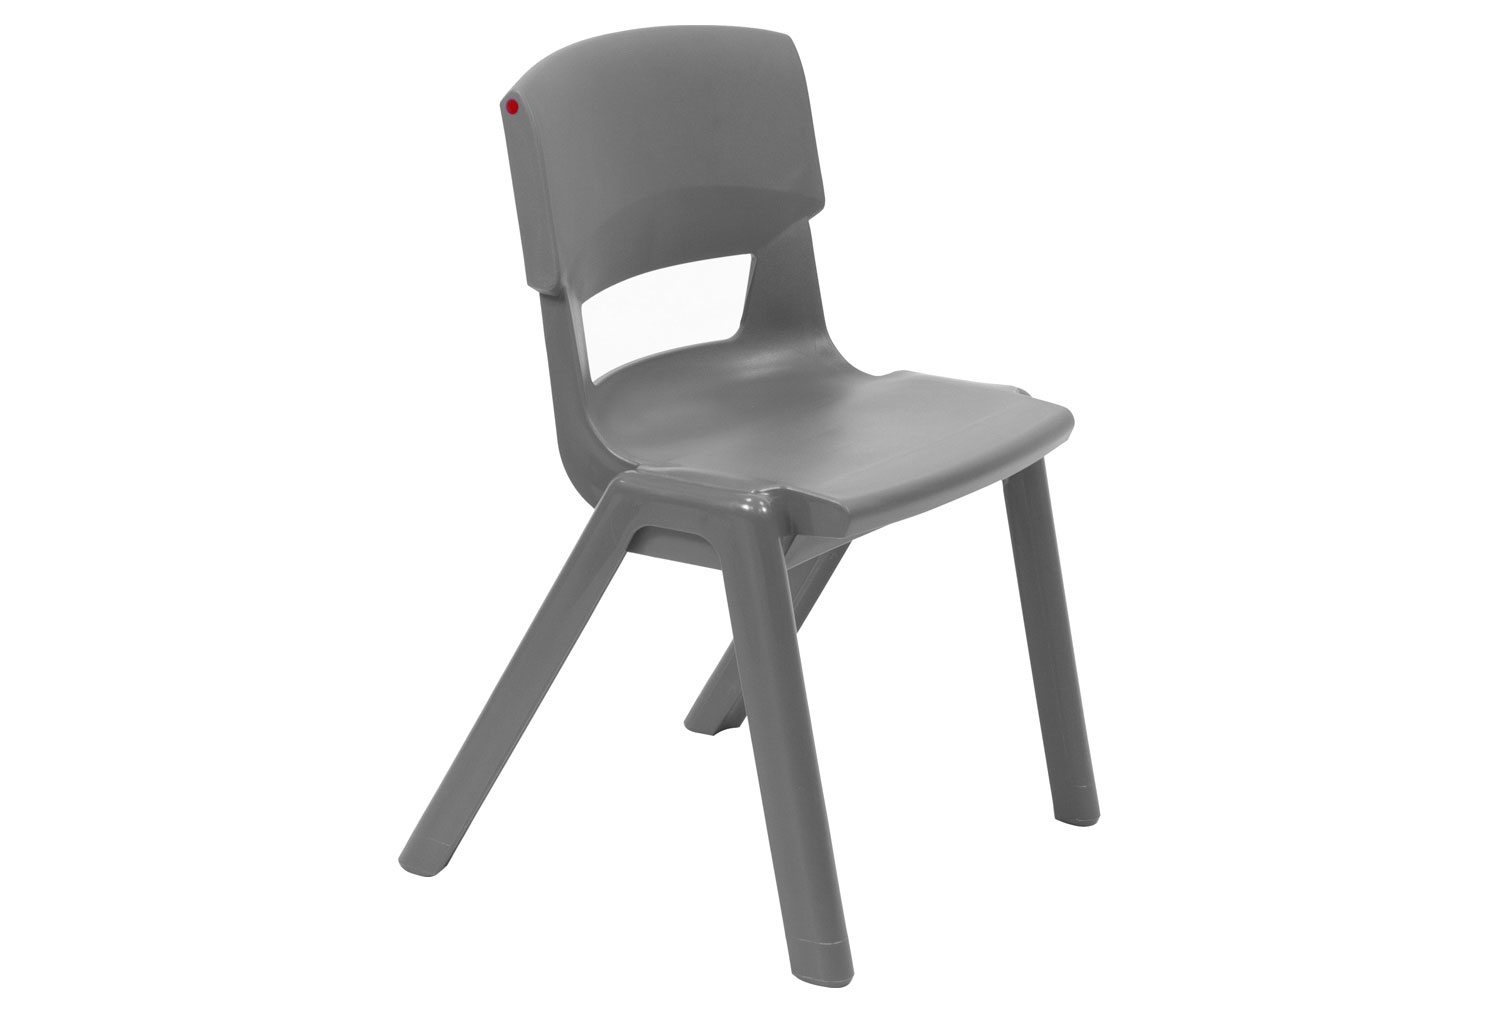 Qty 10 - Postura+ Classroom Chair, 8-11 Years - 34wx31dx38h (cm), Grey